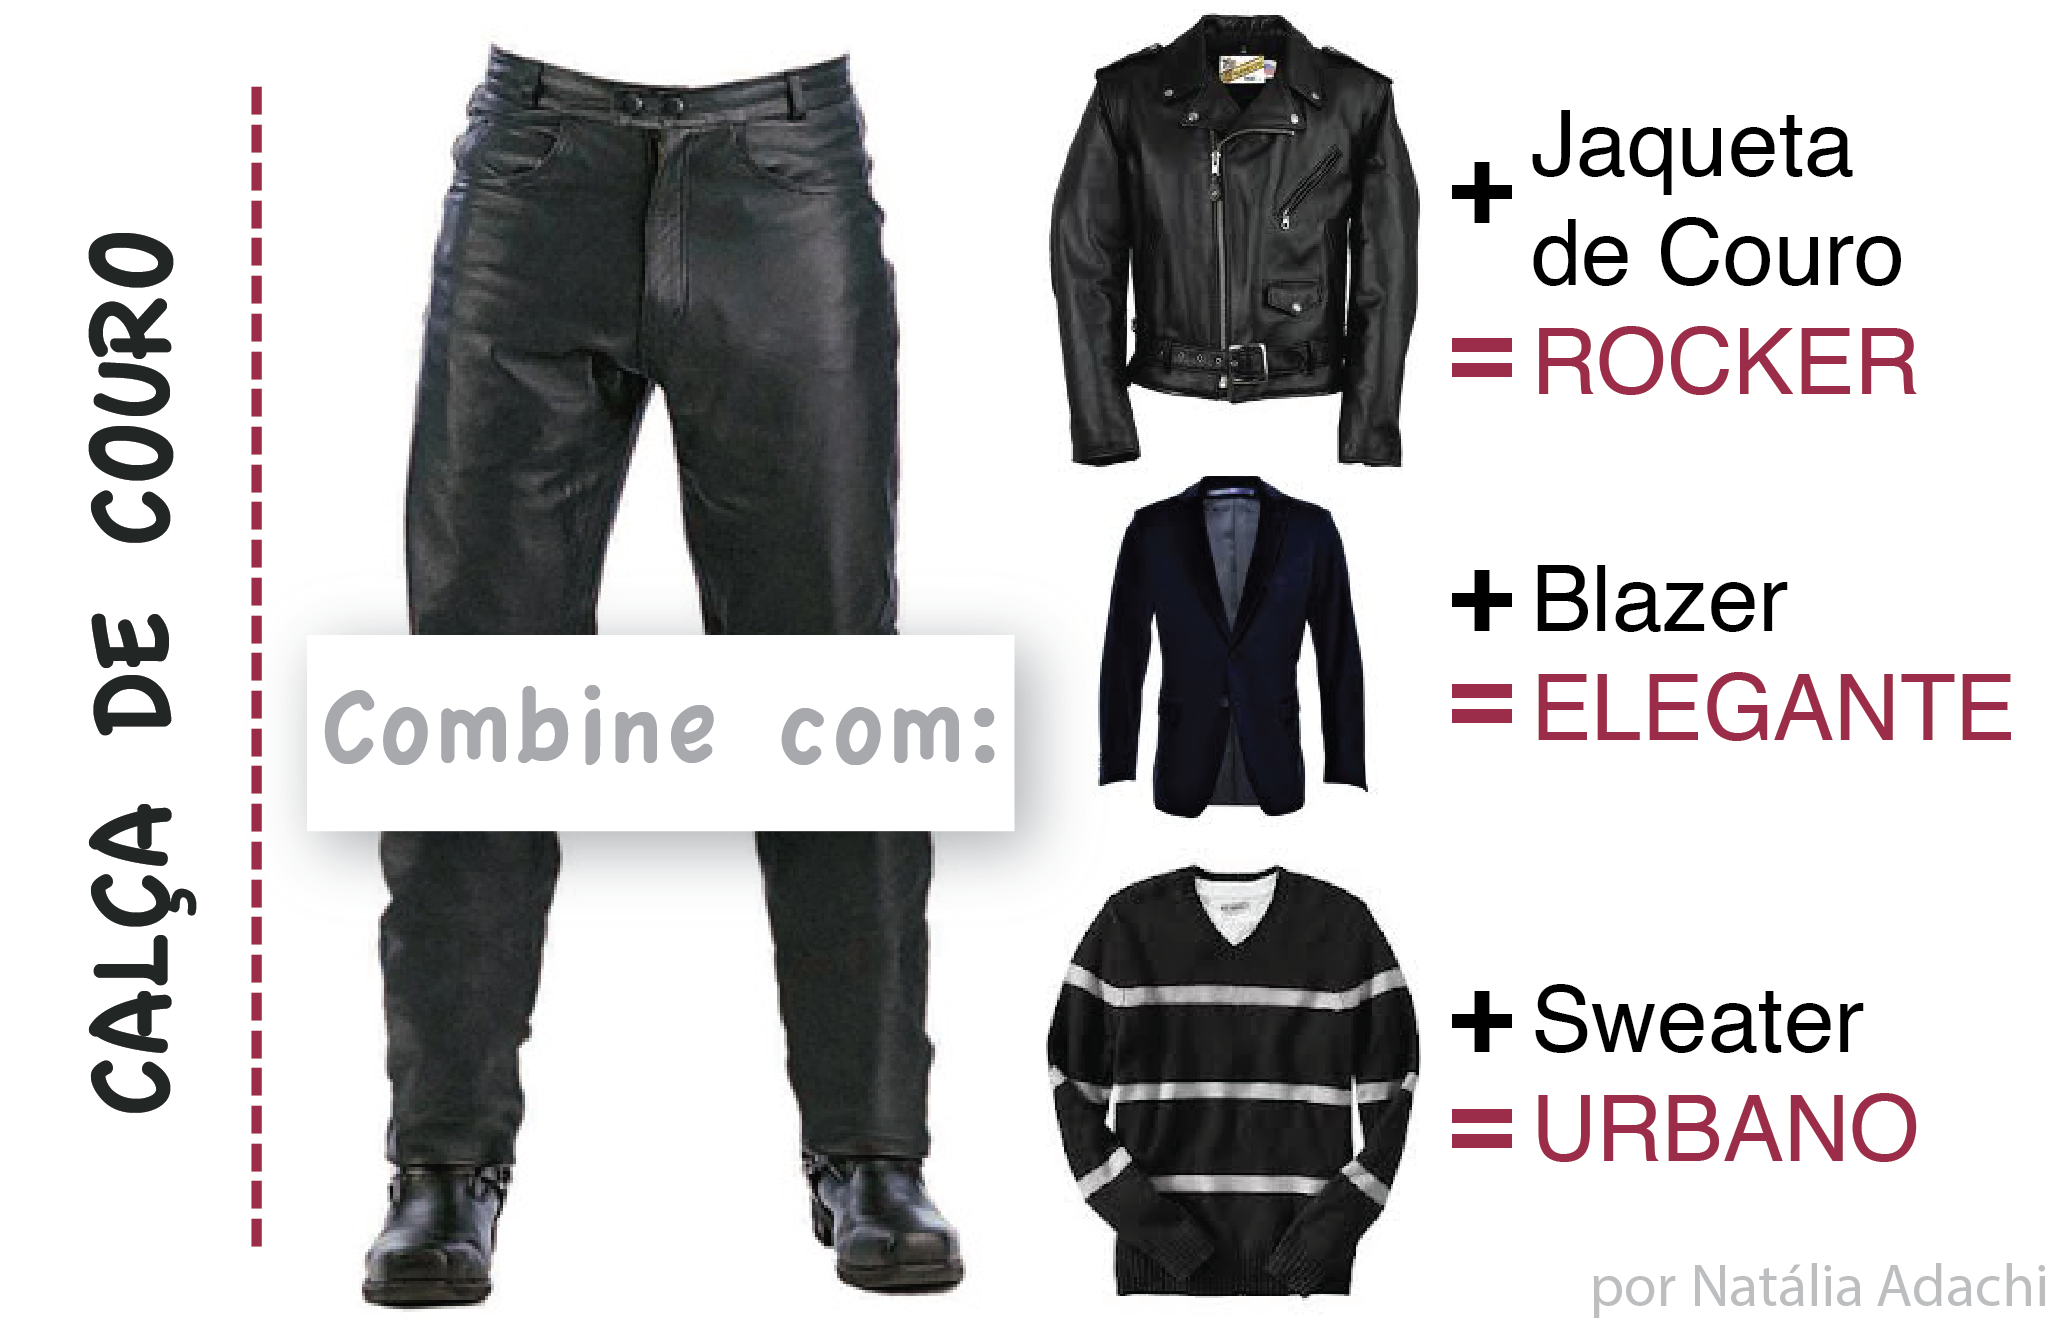 https://caprichosdanati.files.wordpress.com/2013/02/2-calca-de-couro-masculina-para-eles-moda-como-usar-look-rocker-urbano-elegante-leather-pants-trousers-modelo.png